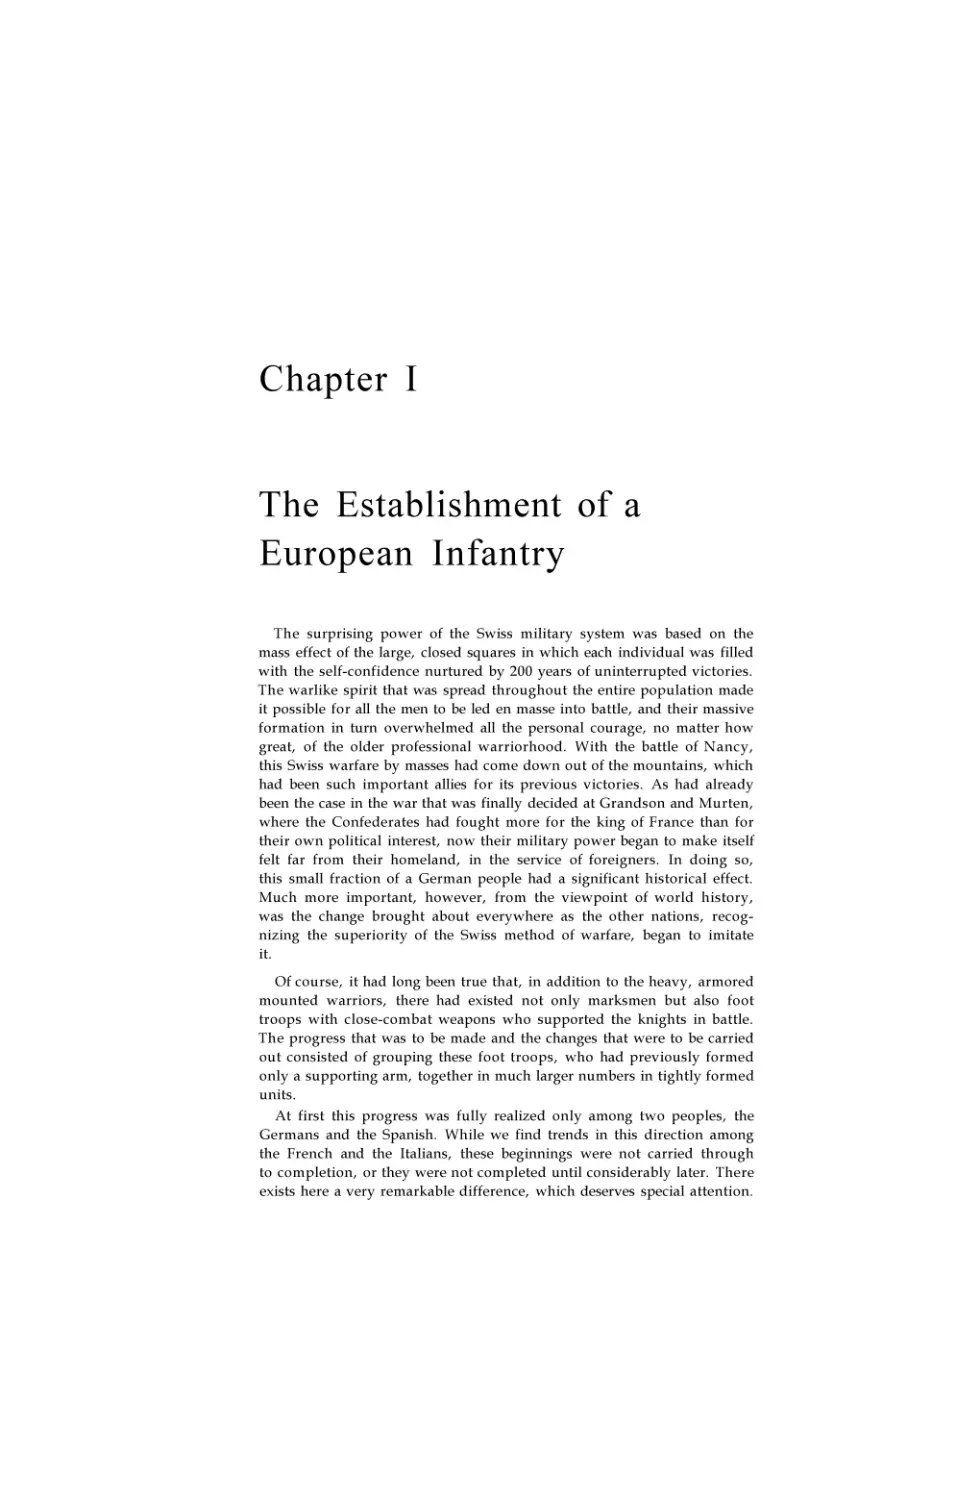 The Establishment of a European Infantry